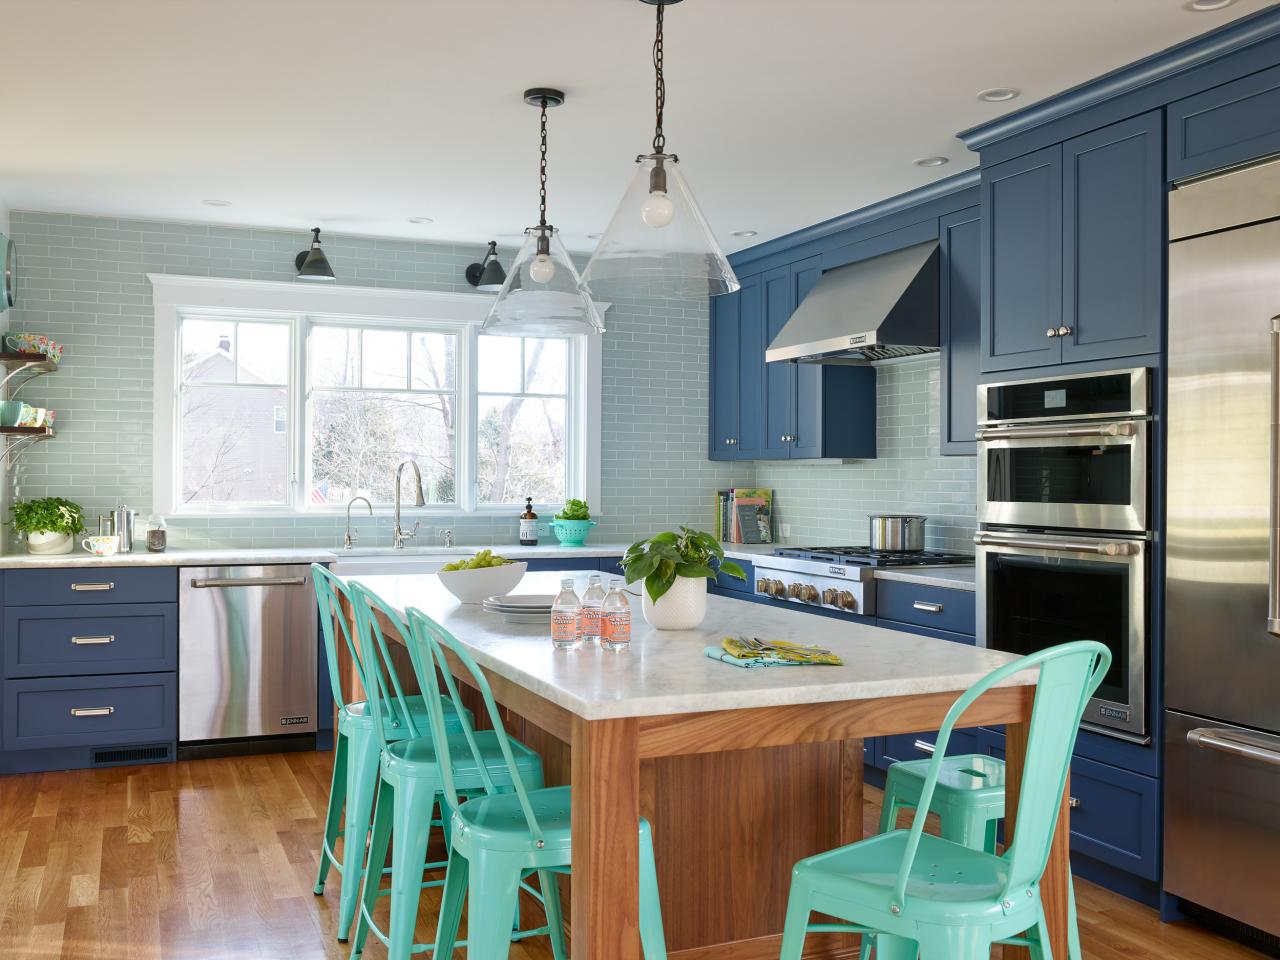 65 Blue Kitchen Cabinet Ideas for Your Decorating Inspiration - InteriorZine